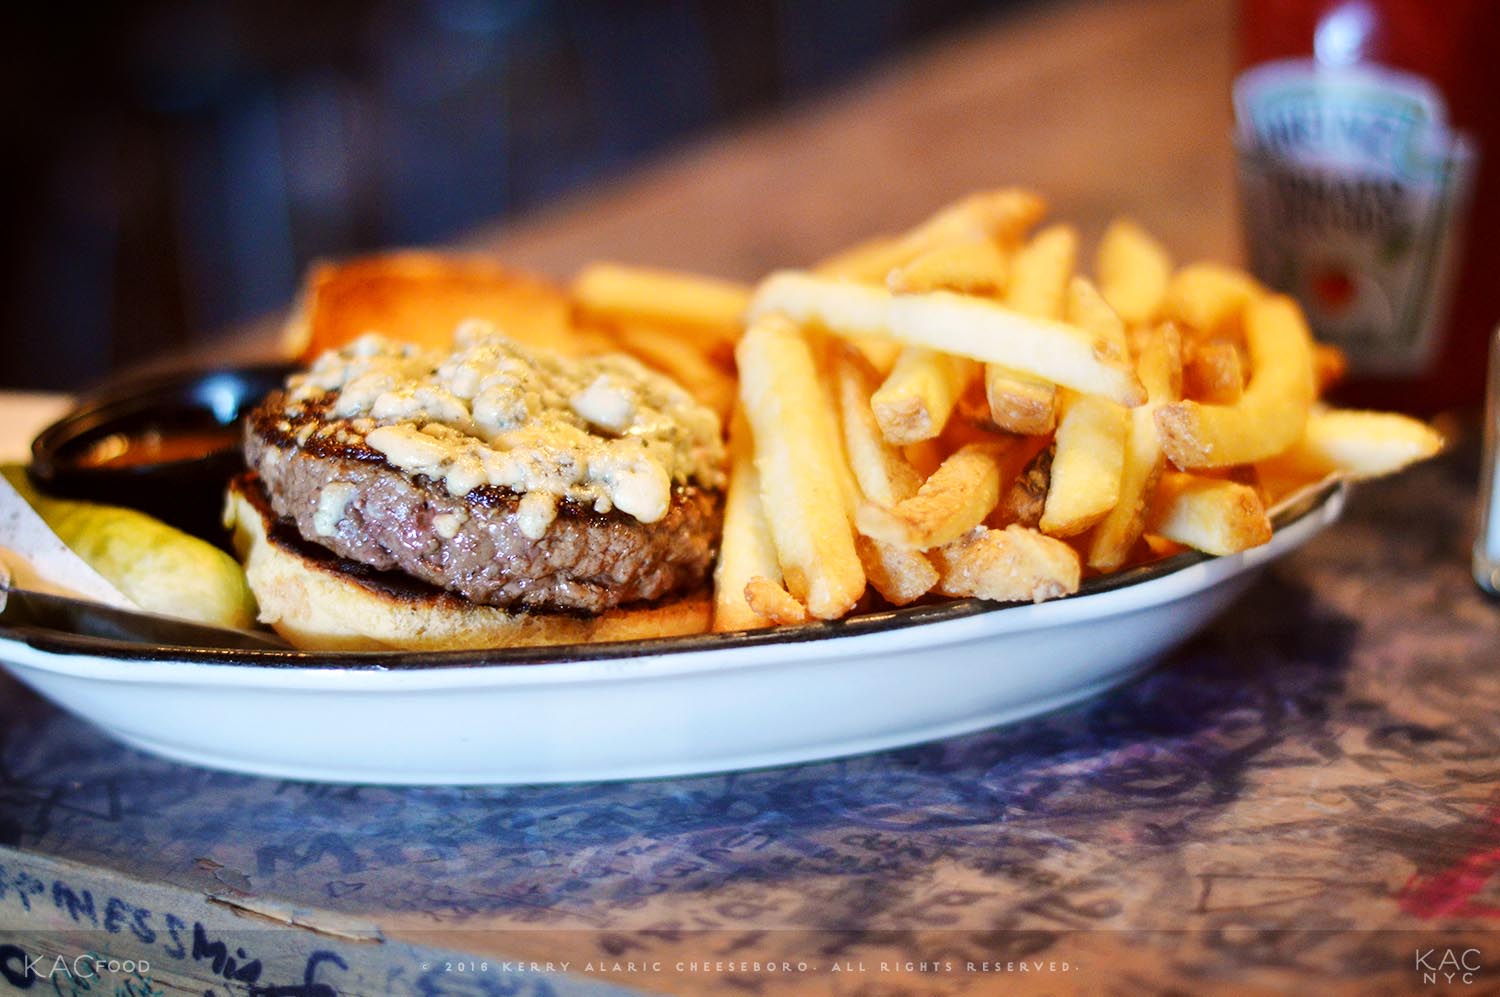 kac_food-160916-black-tap-steak-au-poivre-burger-2-1500.jpg